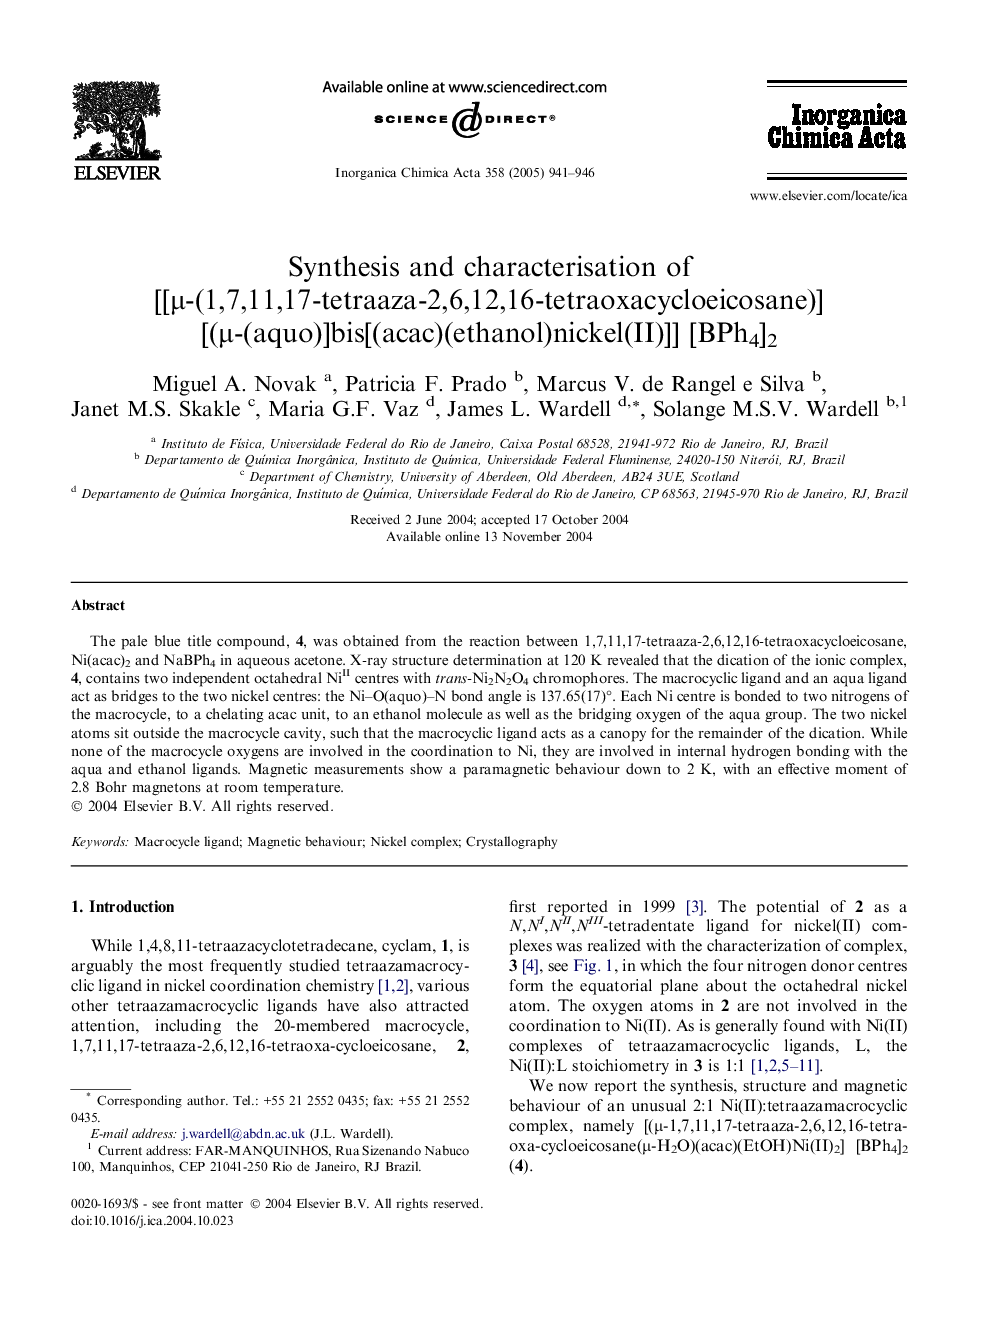 Synthesis and characterisation of [[Î¼-(1,7,11,17-tetraaza-2,6,12,16-tetraoxacycloeicosane)][(Î¼-(aquo)]bis[(acac)(ethanol)nickel(II)]] [BPh4]2